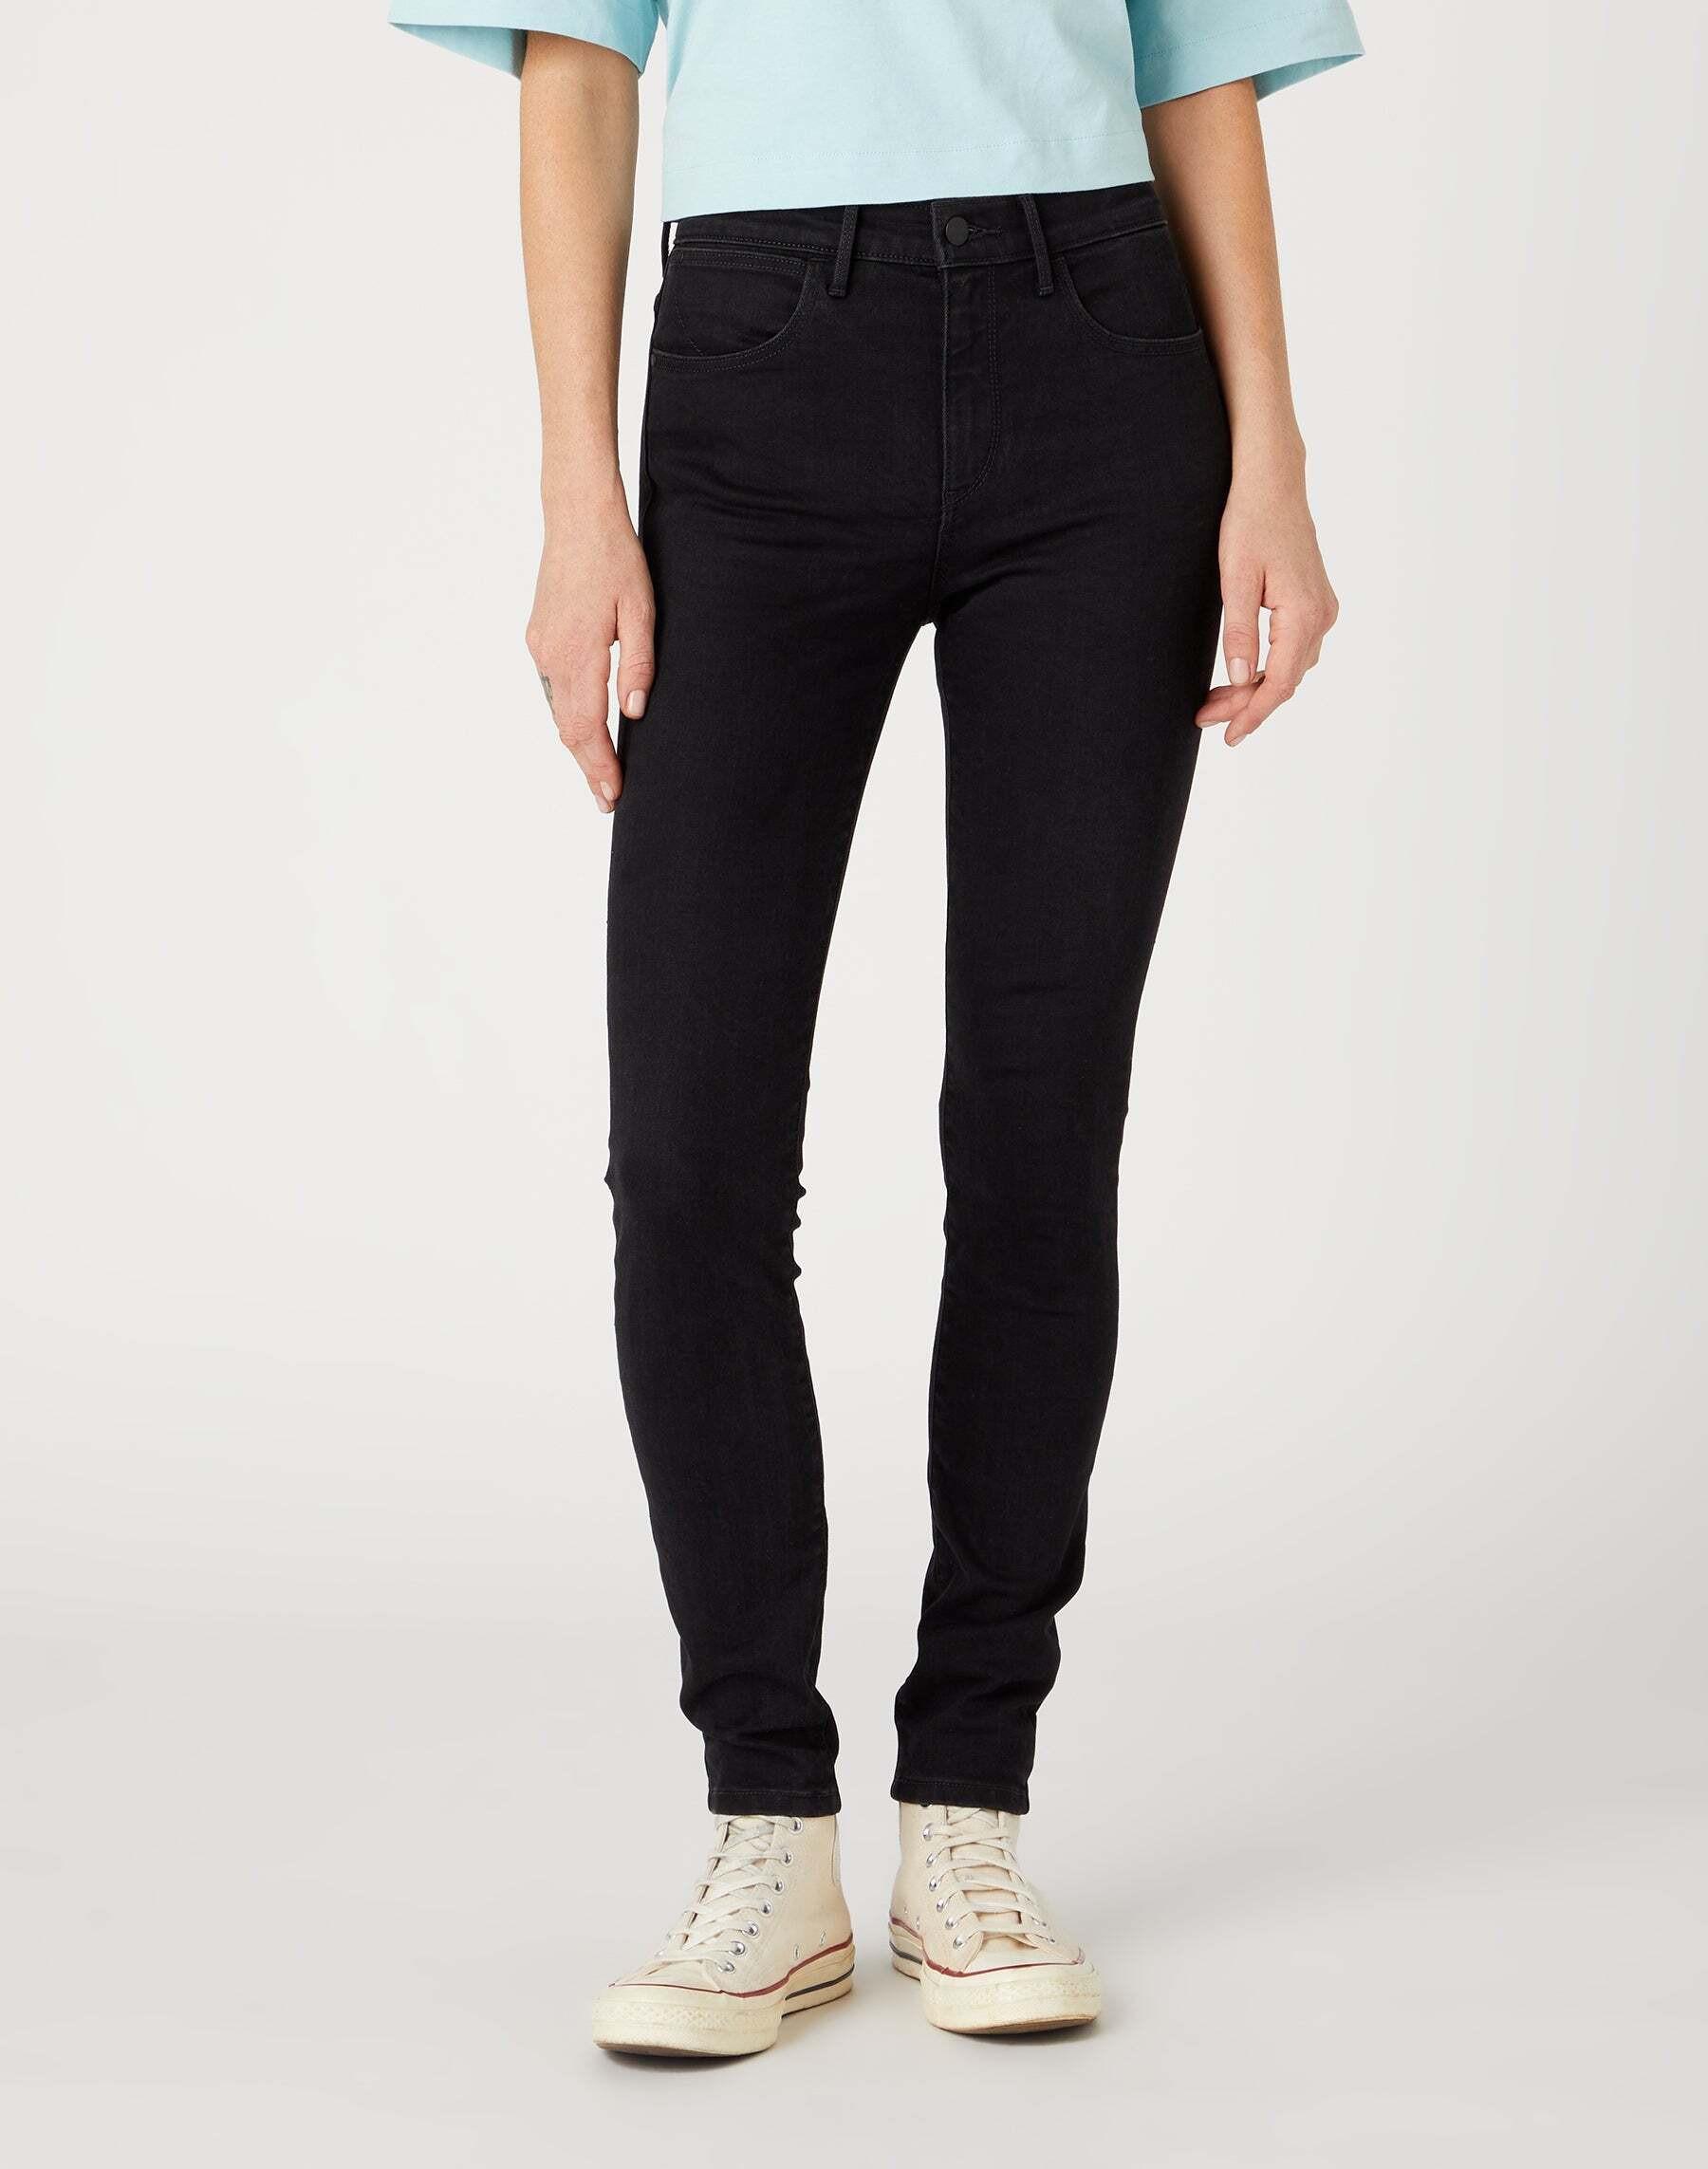 Jeans High Skinny Damen Schwarz L32/W29 von Wrangler